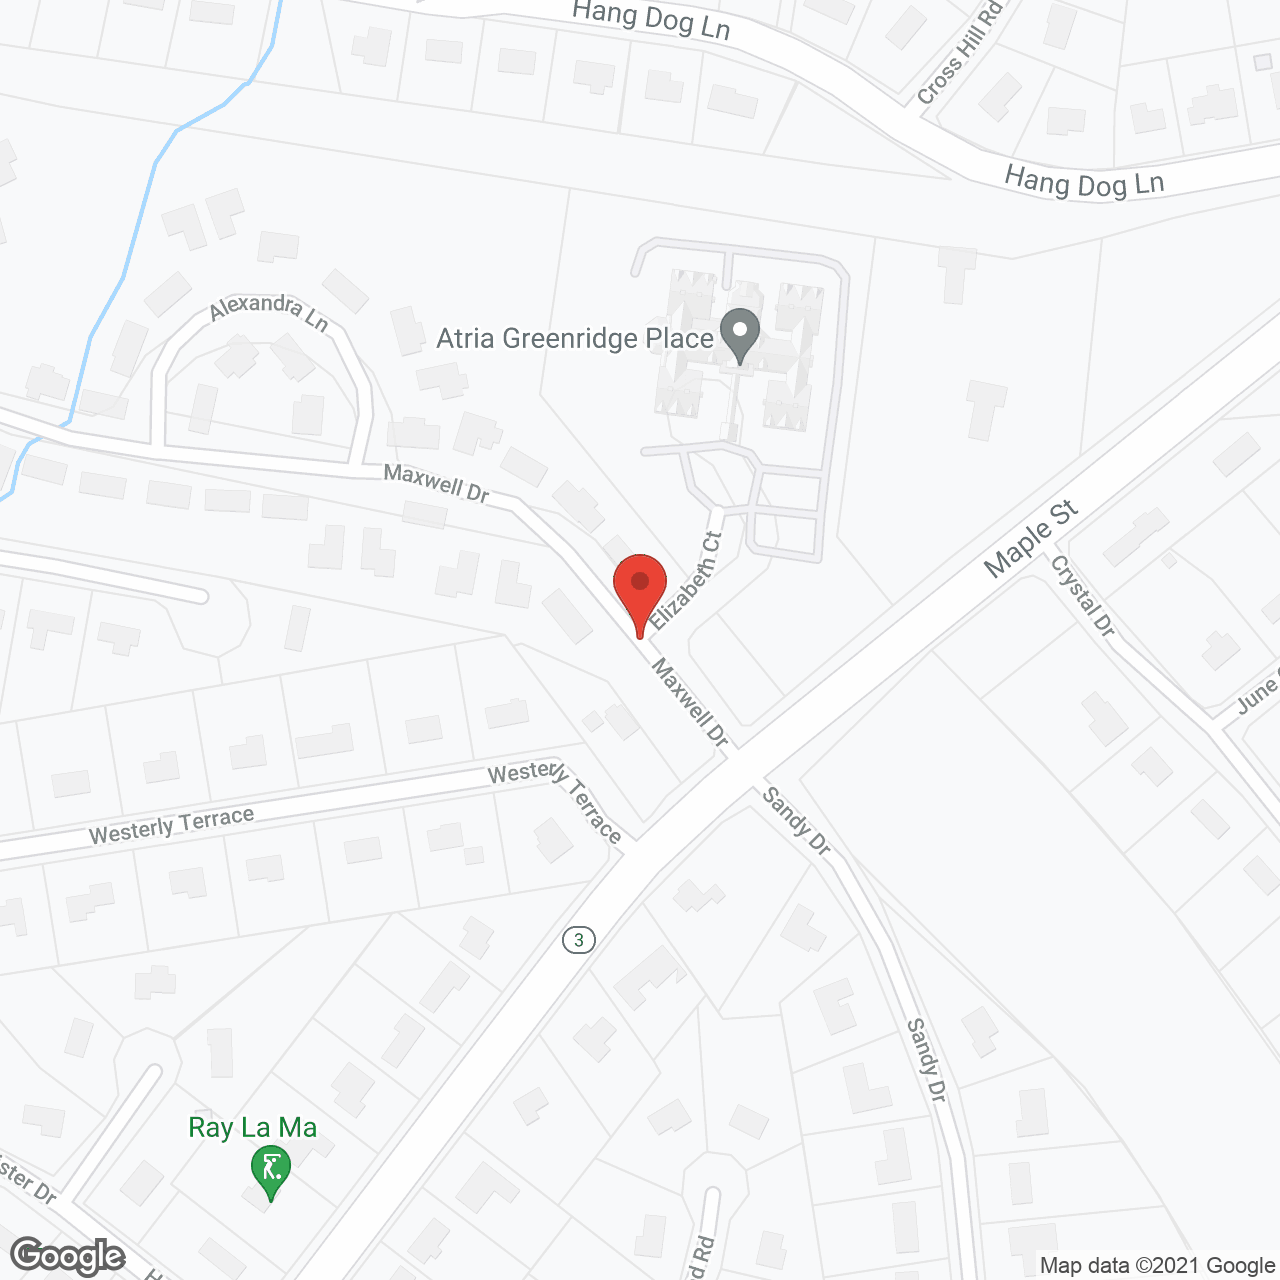 Atria Greenridge Place in google map